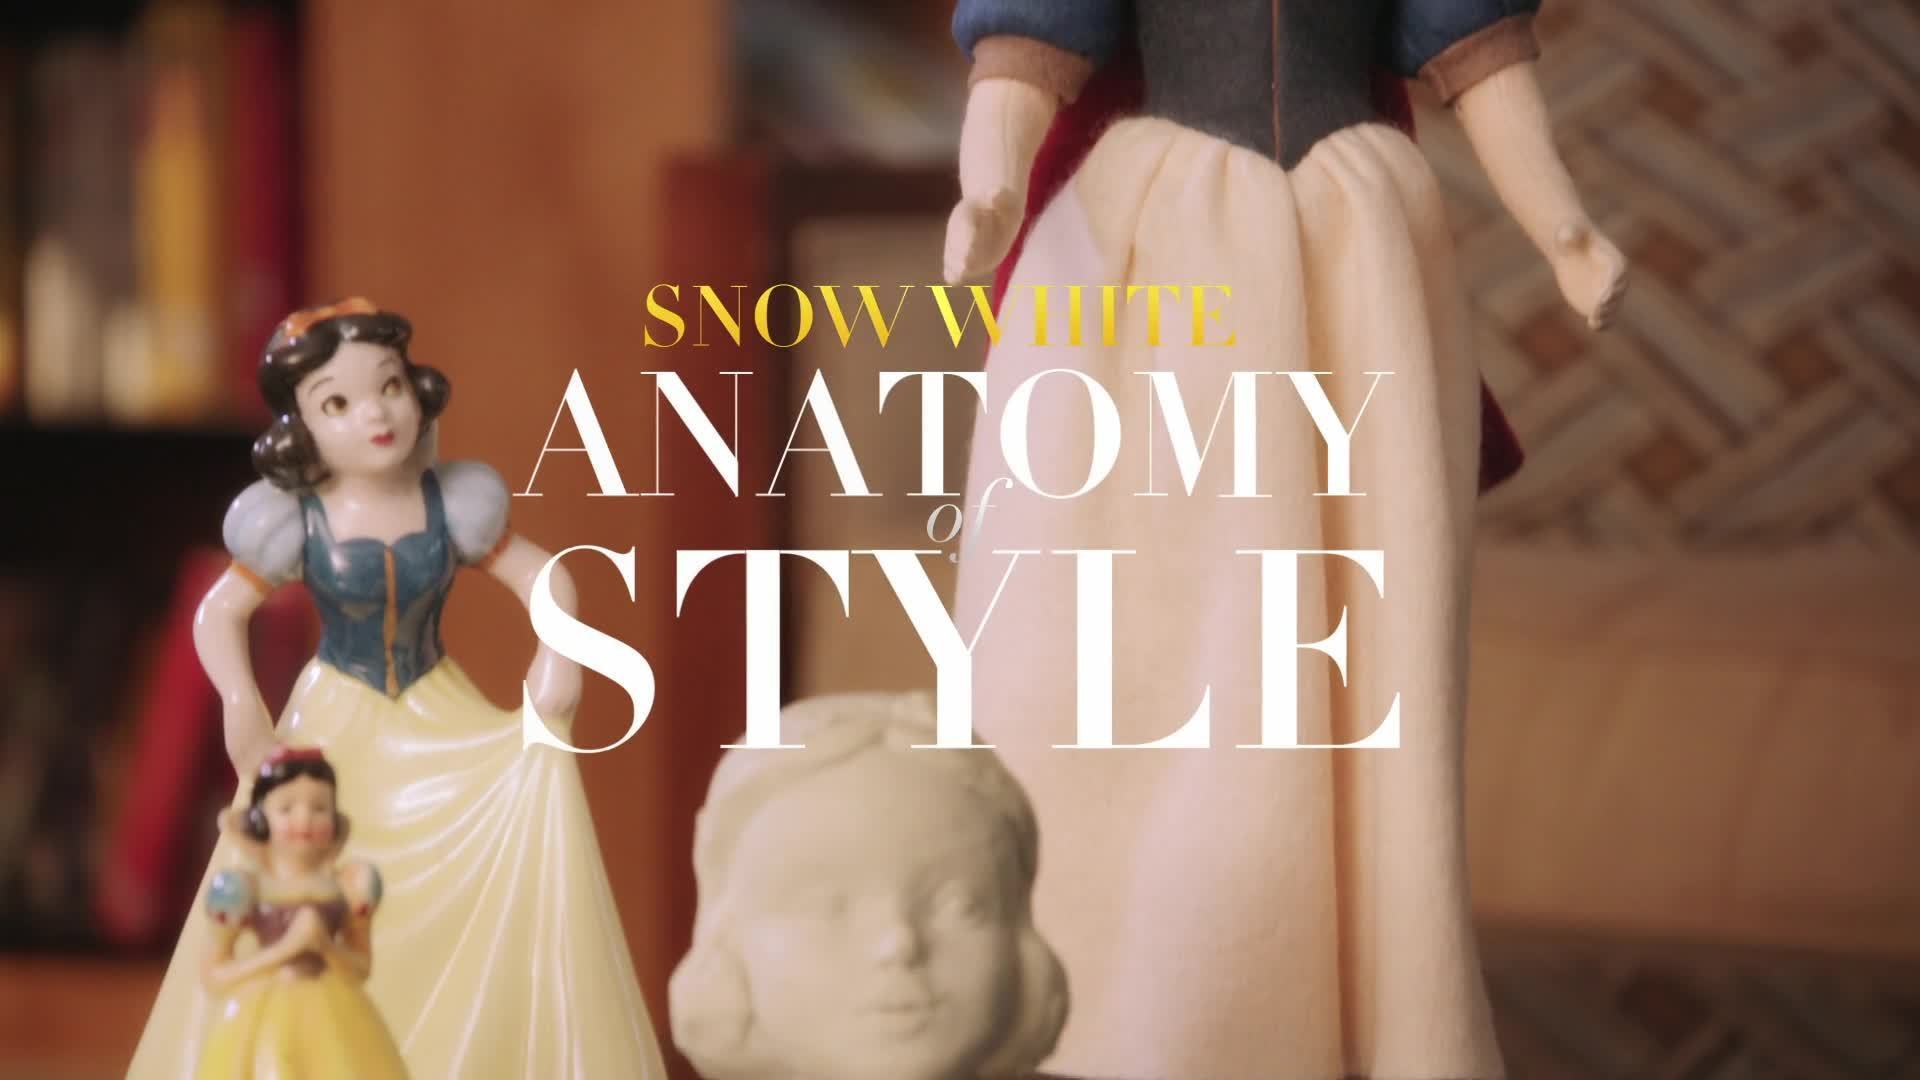 Fashion Designers Naeem Kahn & Alberta Ferretti Explore Snow White’s “Anatomy of Style”